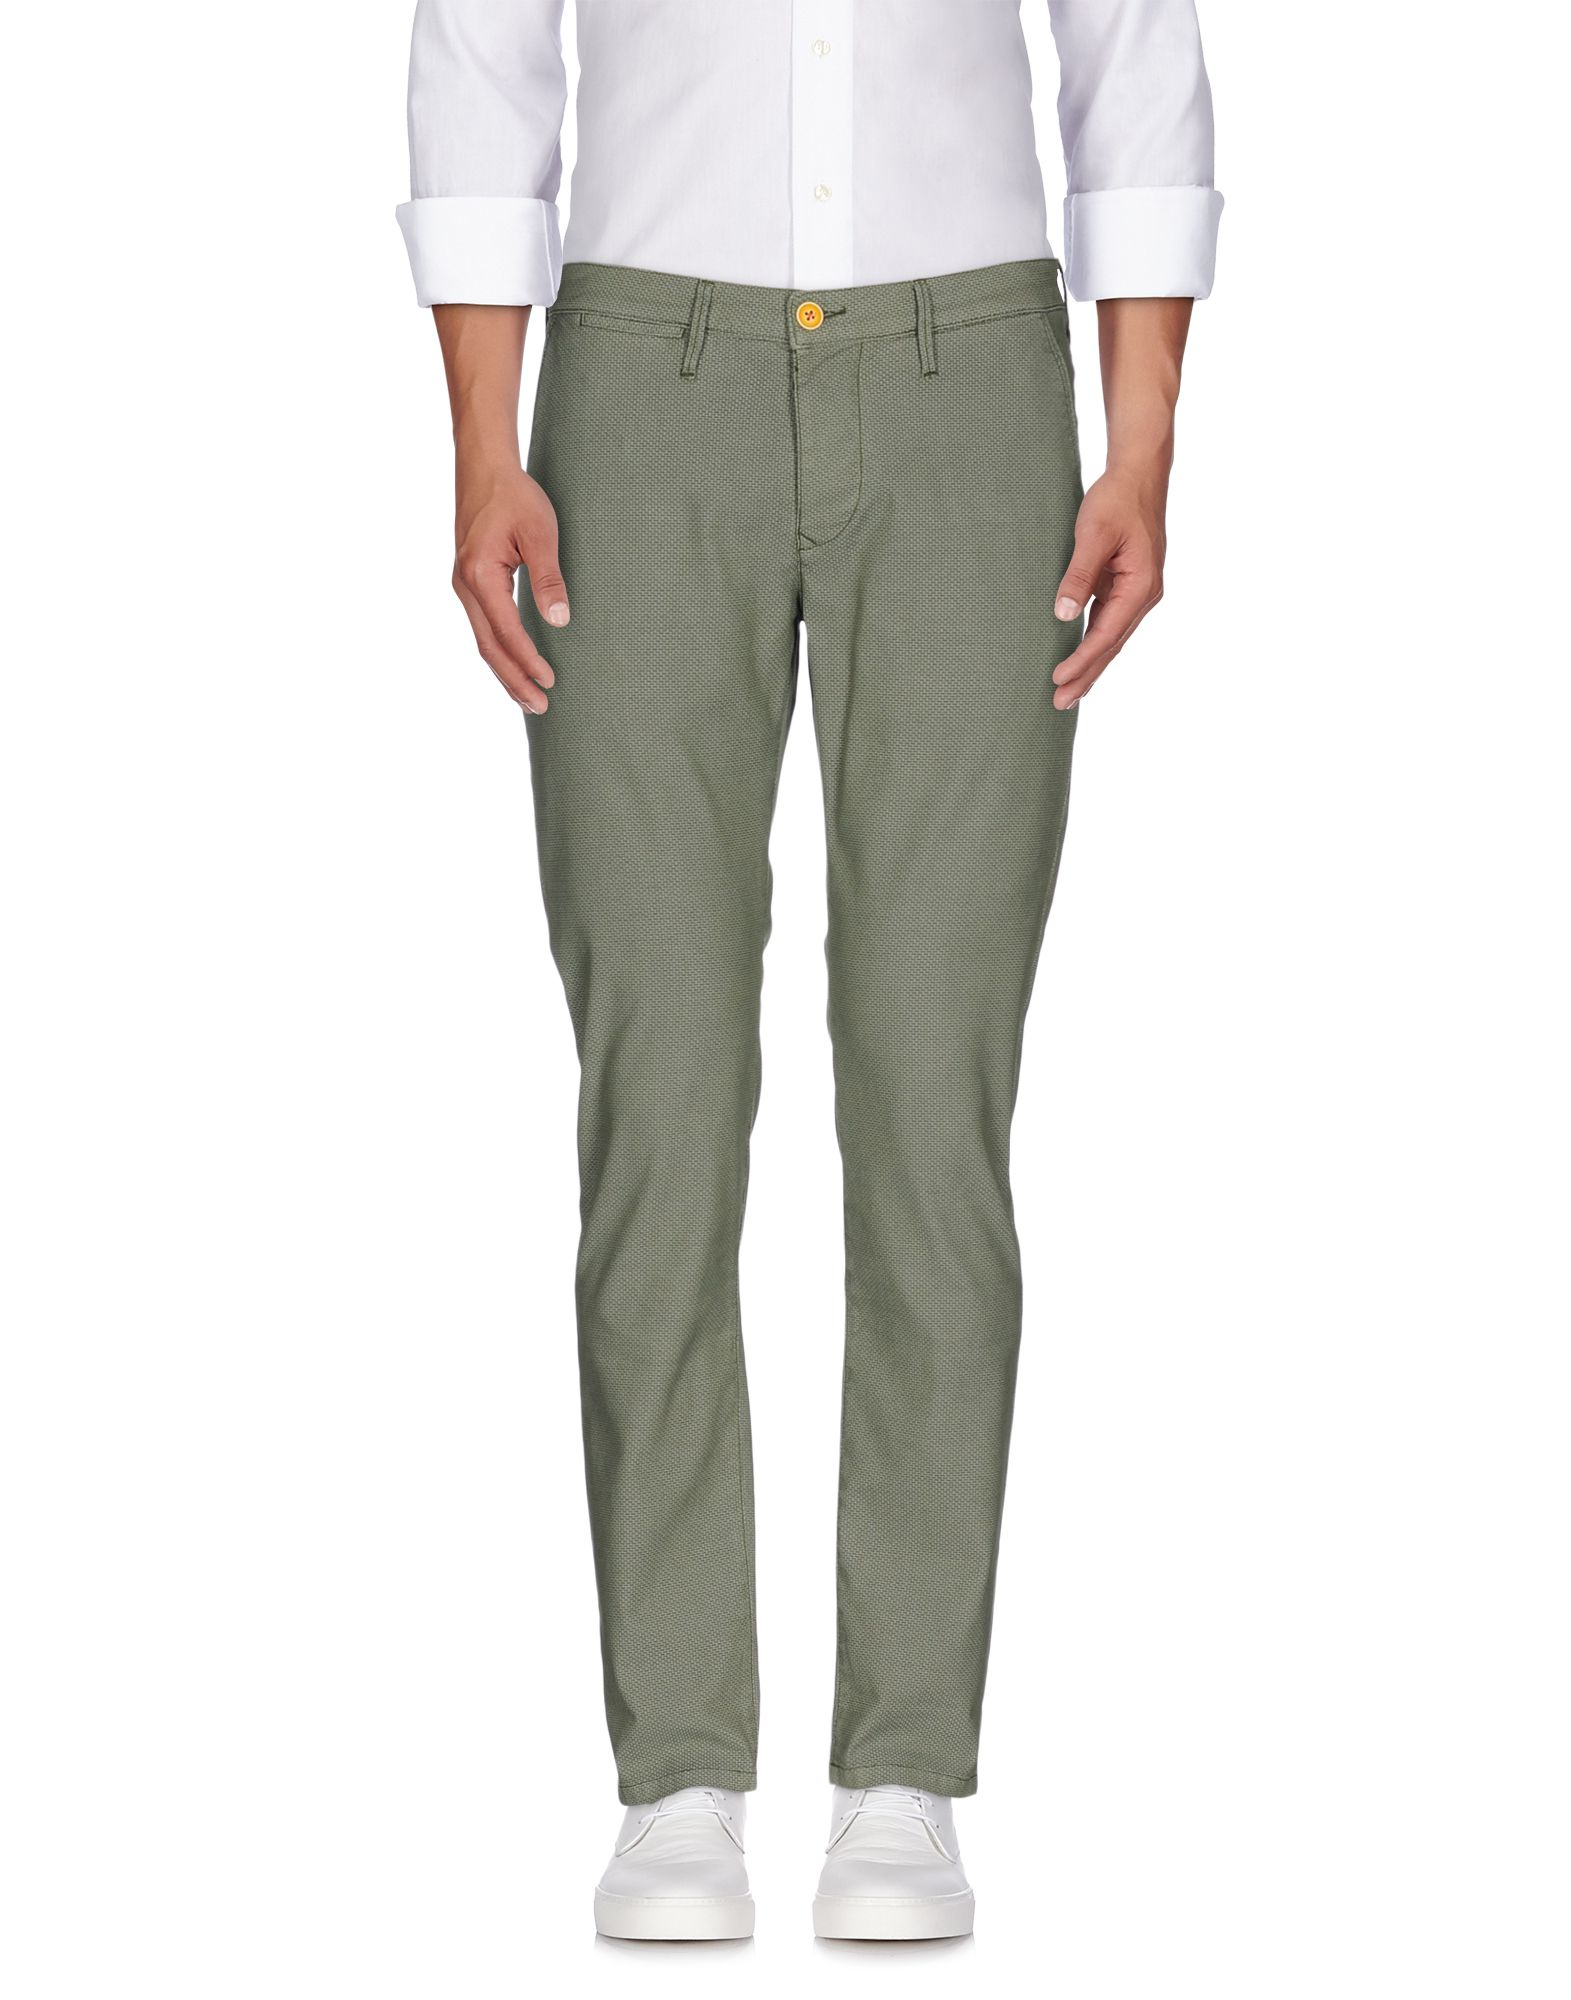 Lyst - 0/Zero Construction Casual Trouser in Green for Men